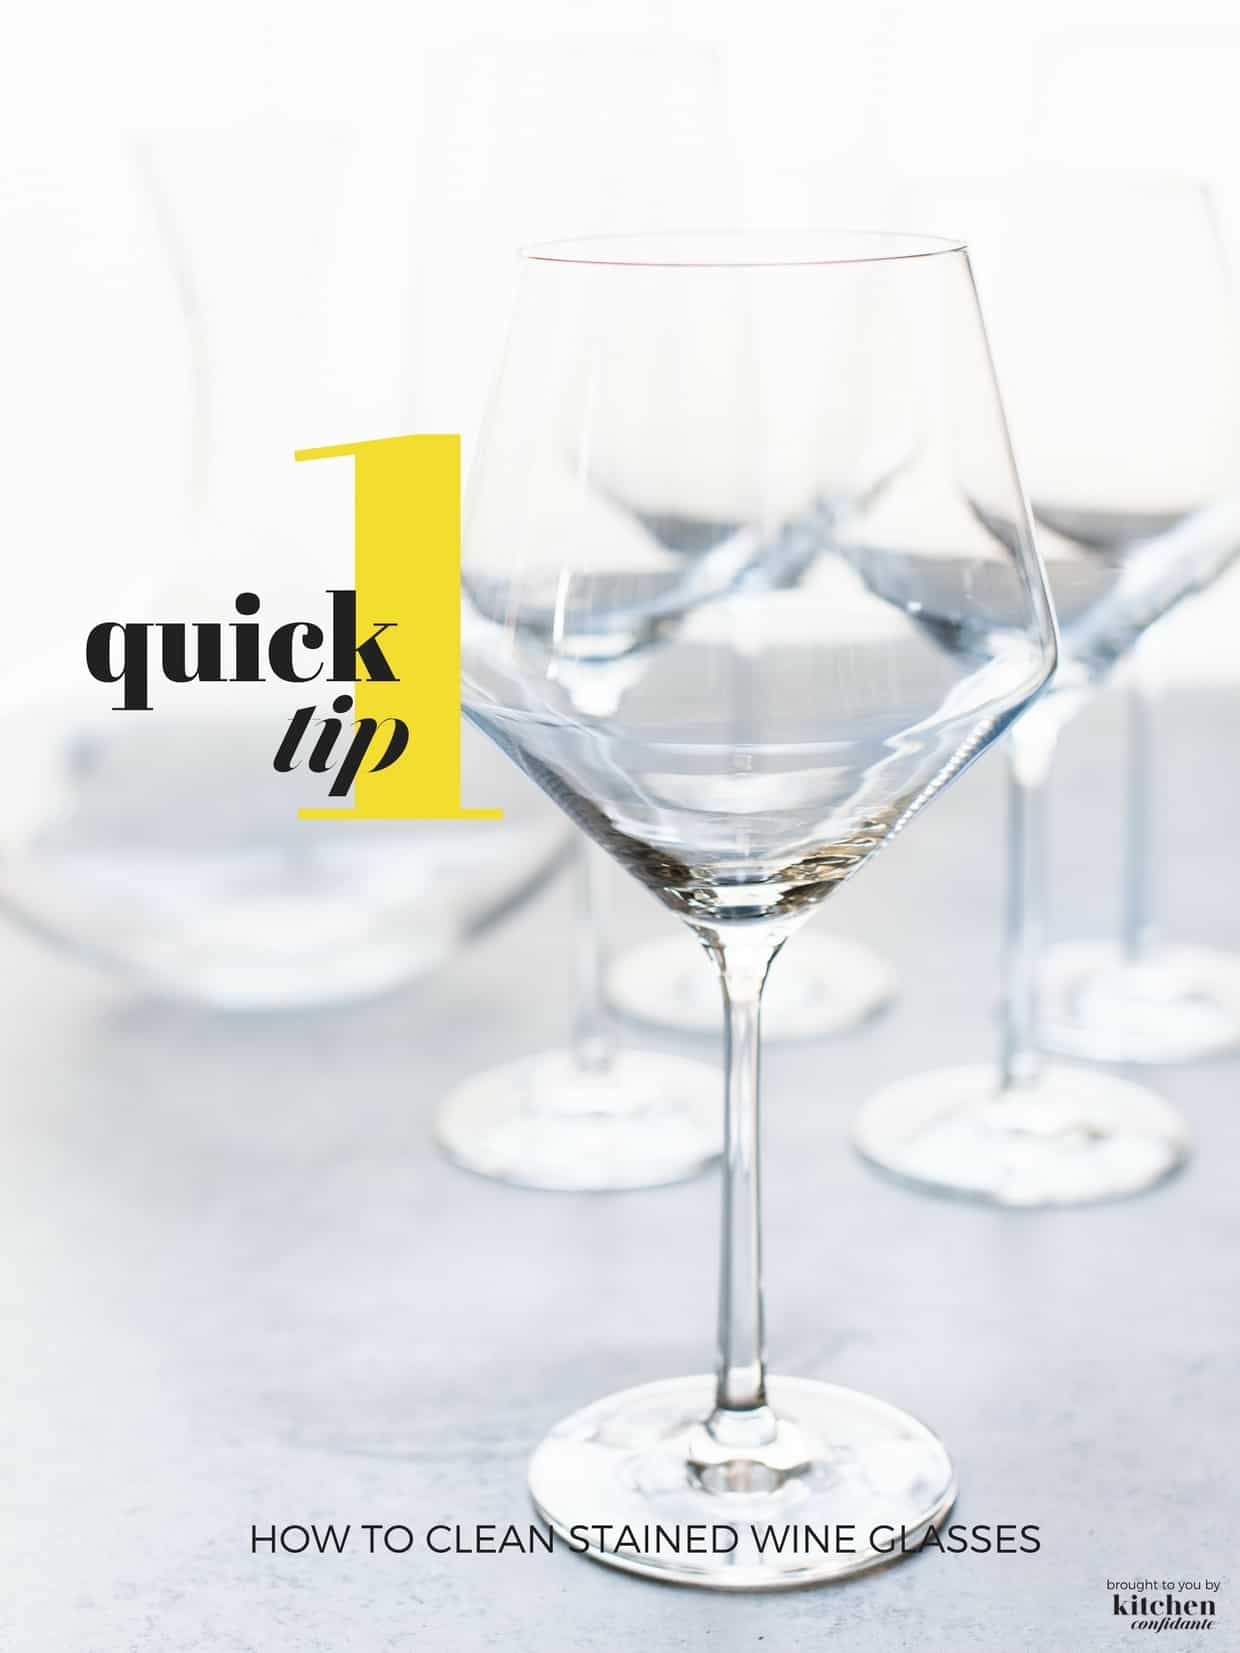 https://kitchenconfidante.com/wp-content/uploads/2017/08/How-to-Clean-Stained-Wine-Glasses-kitchenconfidante.com-3.jpg